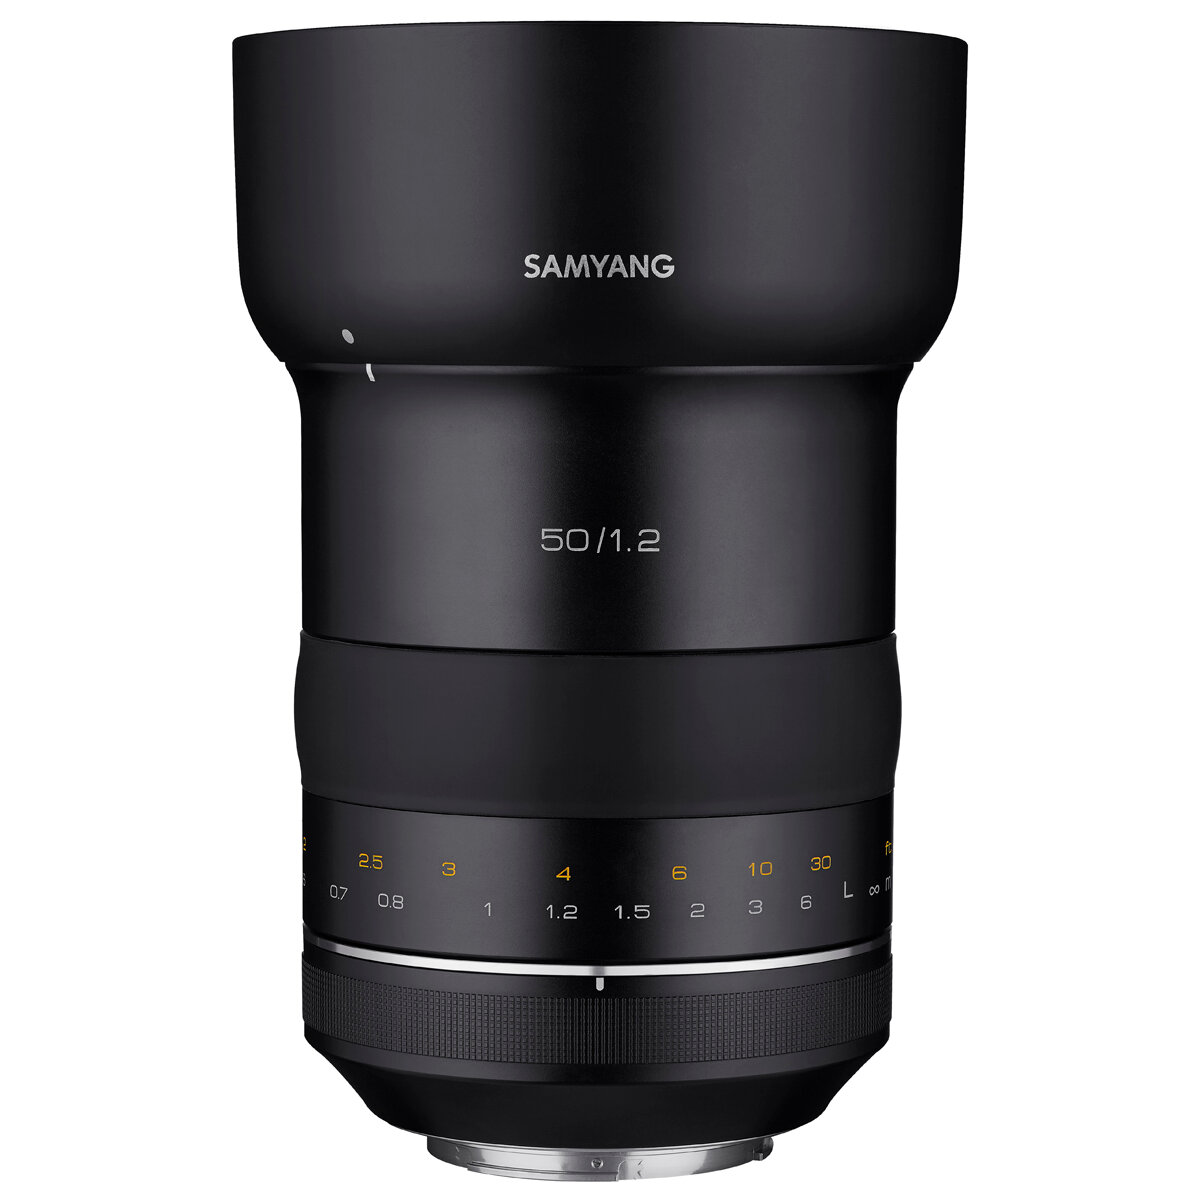 Samyang 50mm f/1.2 Premium XP AE Canon